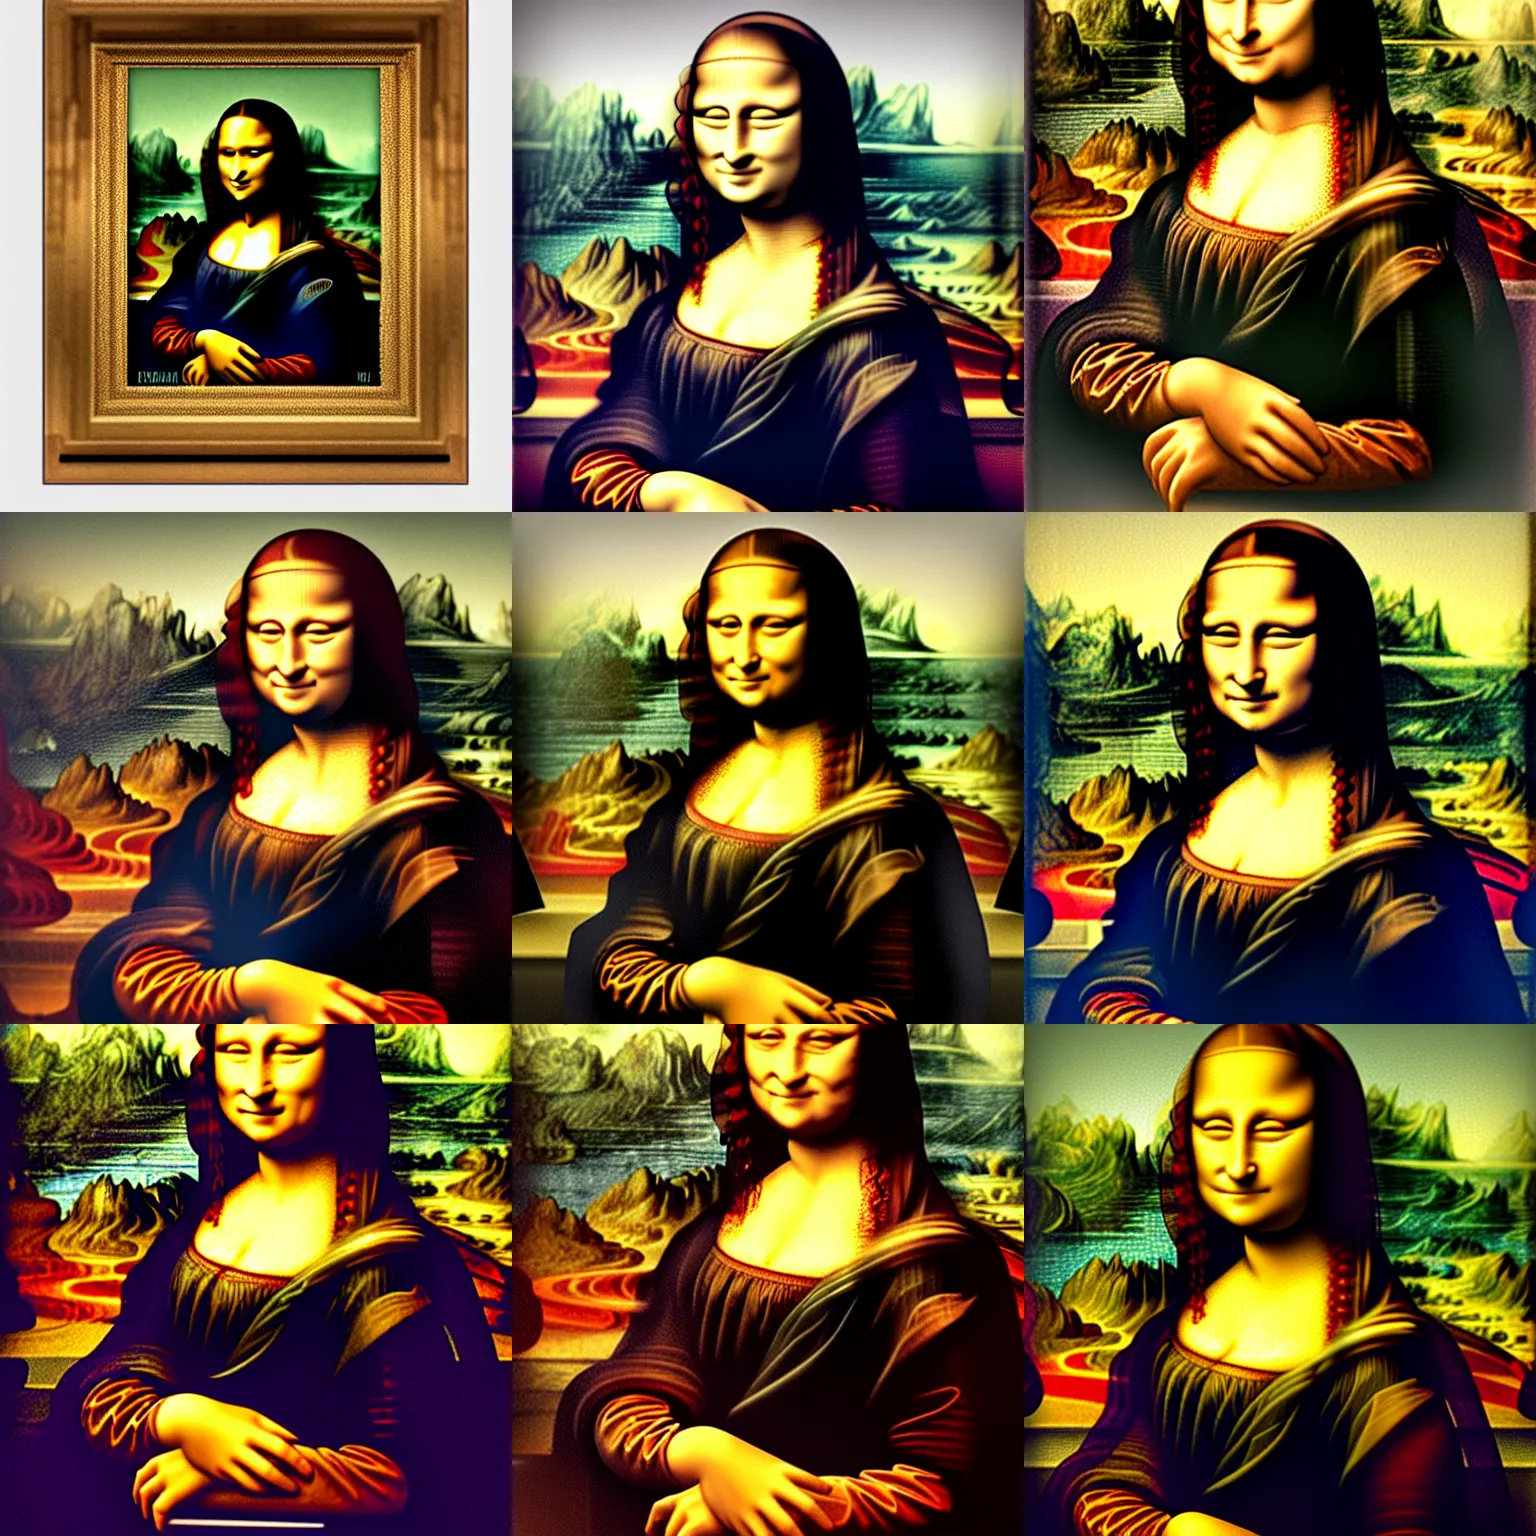 Prompt: Mona Lisa as a DJ